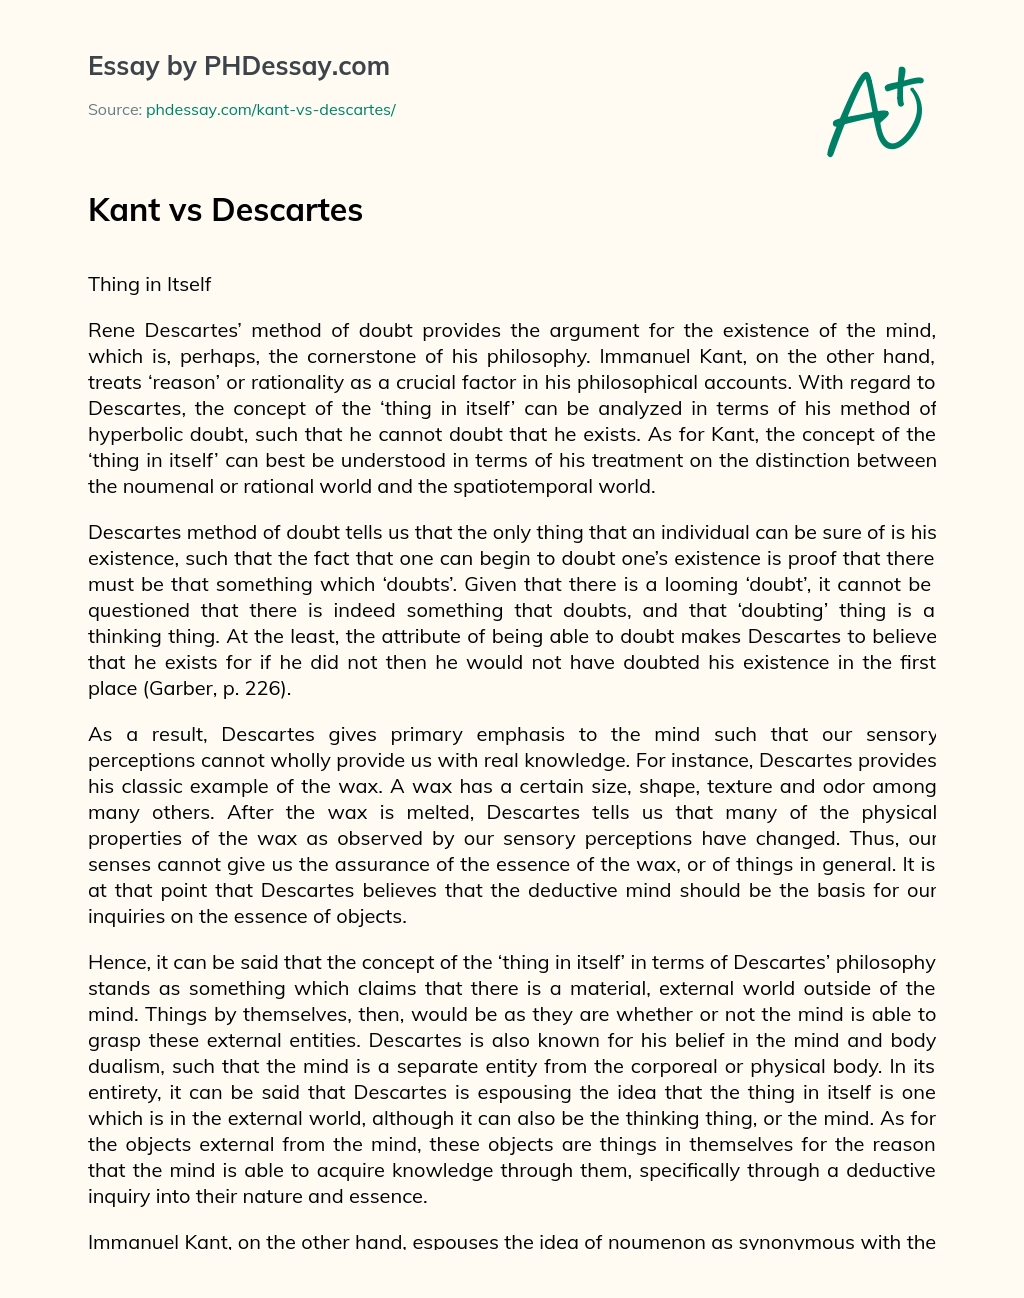 Kant vs Descartes essay